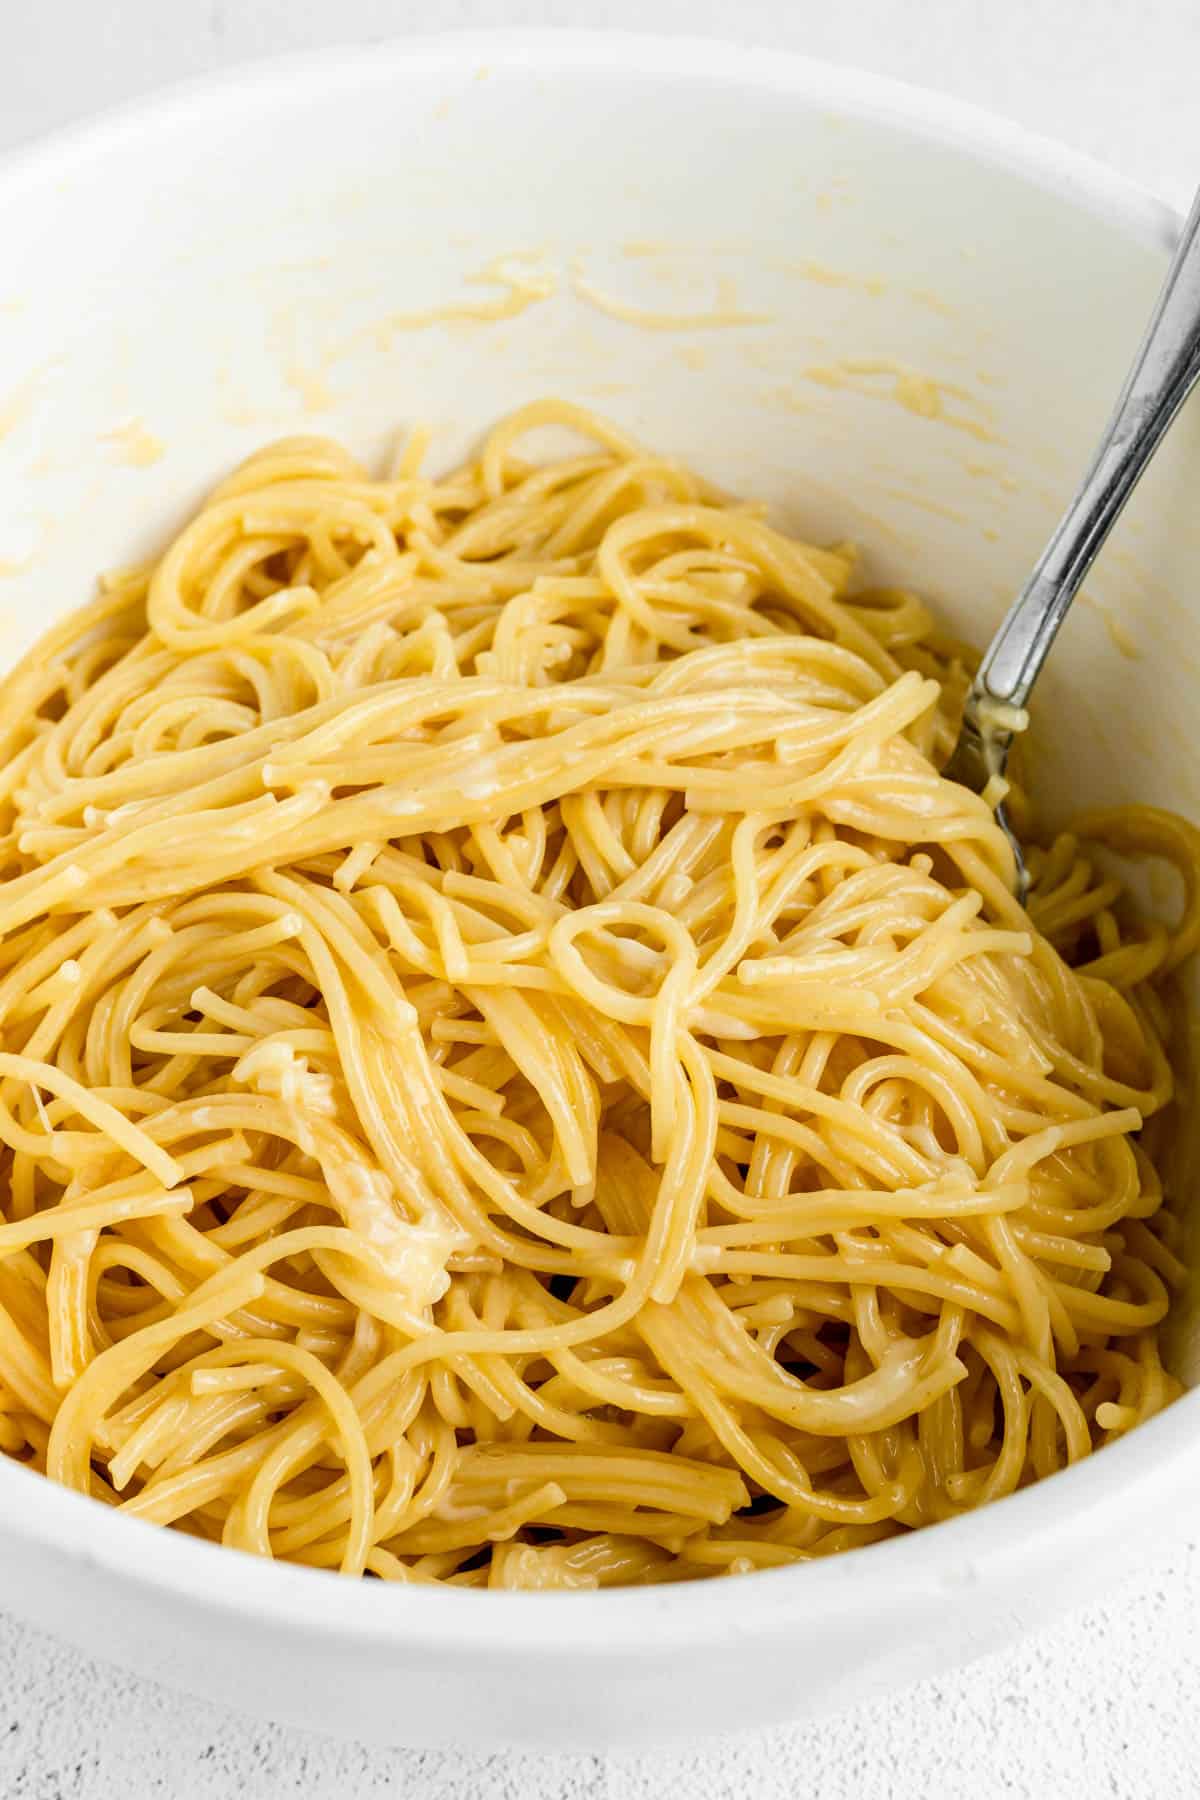 Stirring cooked spaghetti noodles with a beaten egg to make spaghetti pie.